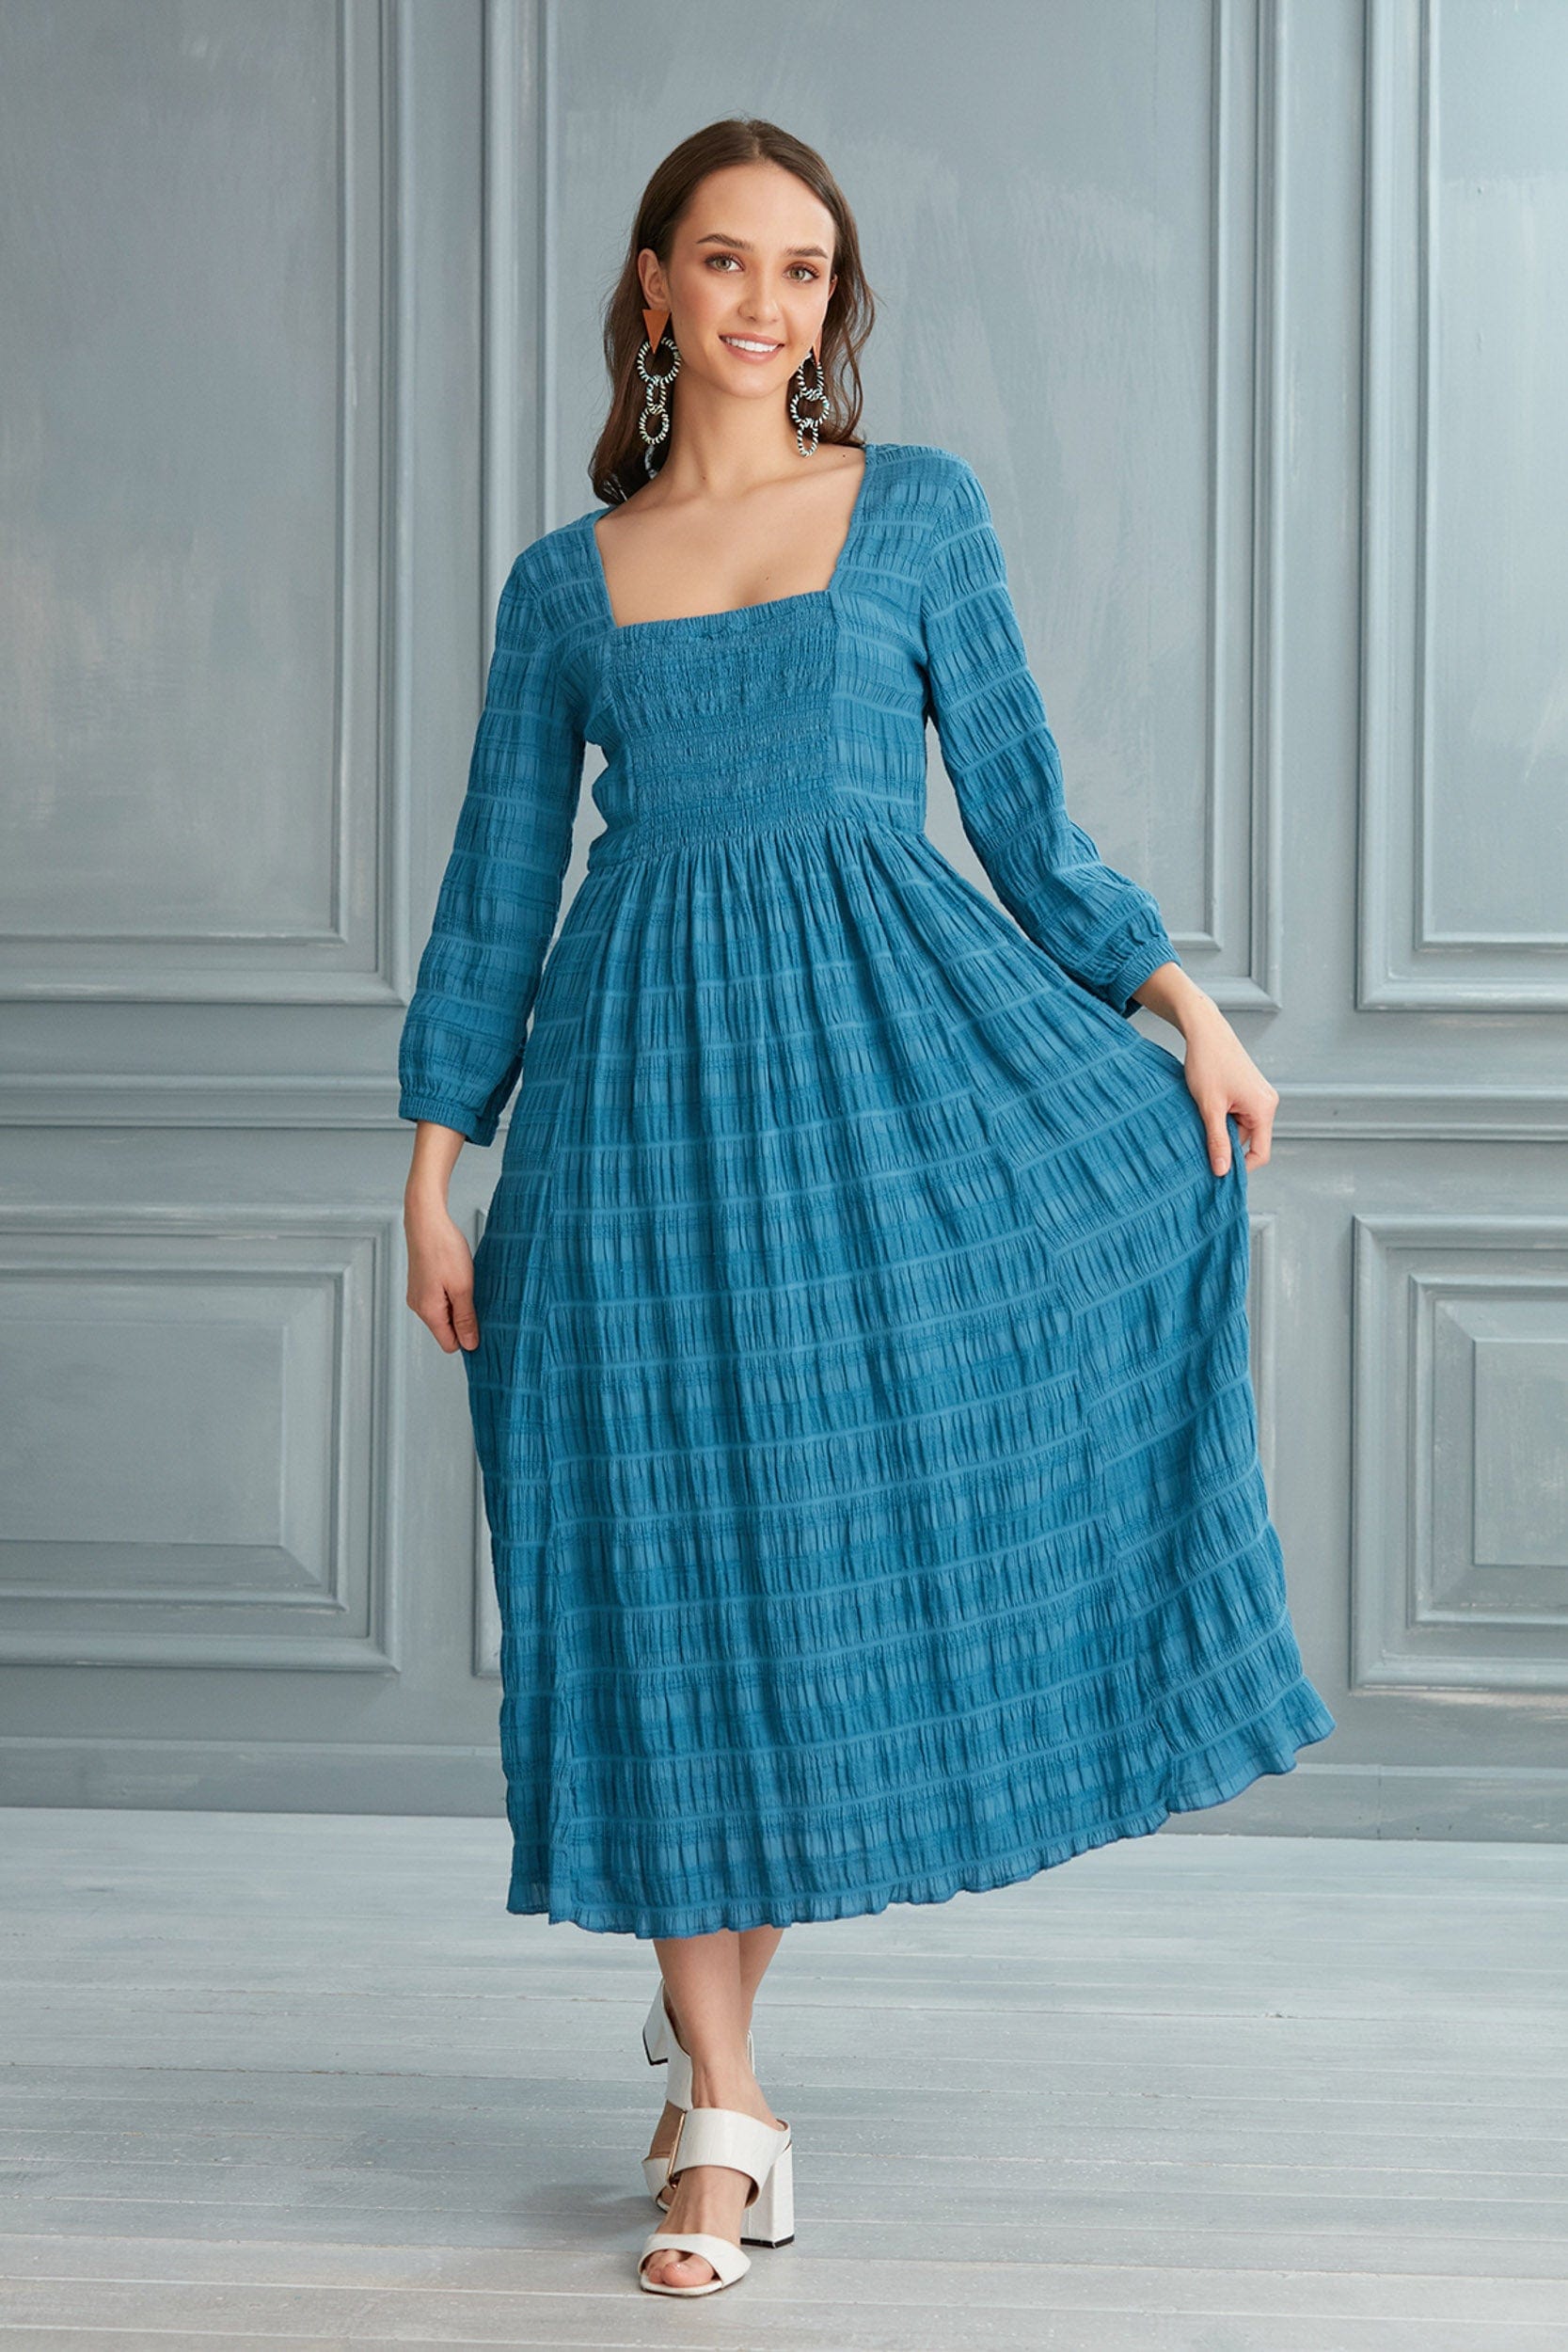 Begonville Elbise Suki Kare Yakalı Midi Elbise - Mavi